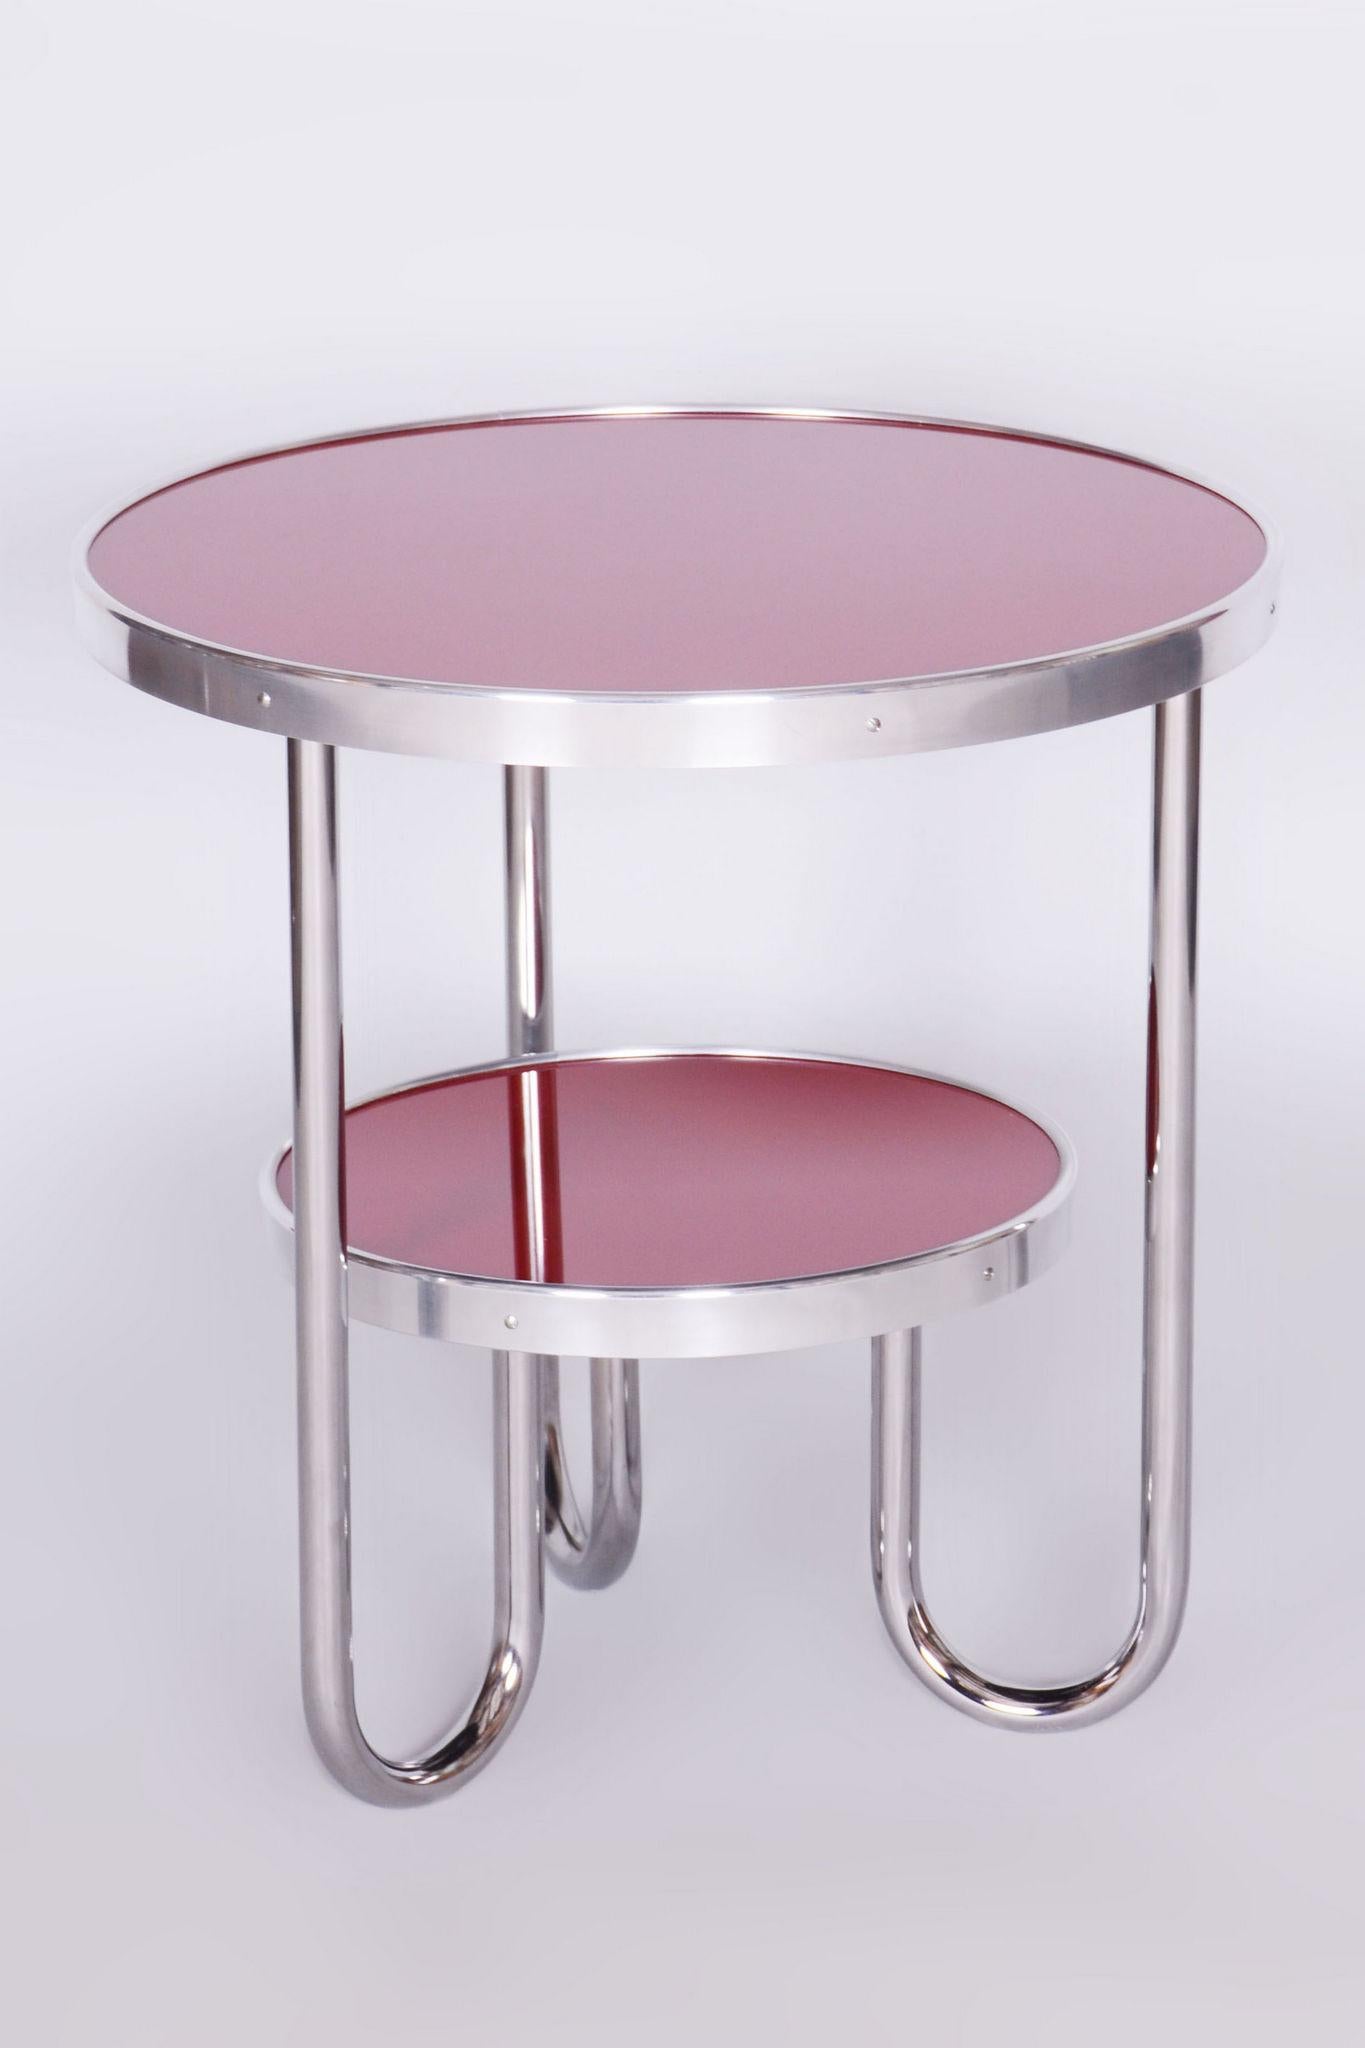 Restored Bauhaus Small Table, Kovona, Spruce, Chrome, Czechia, 1930s For Sale 4